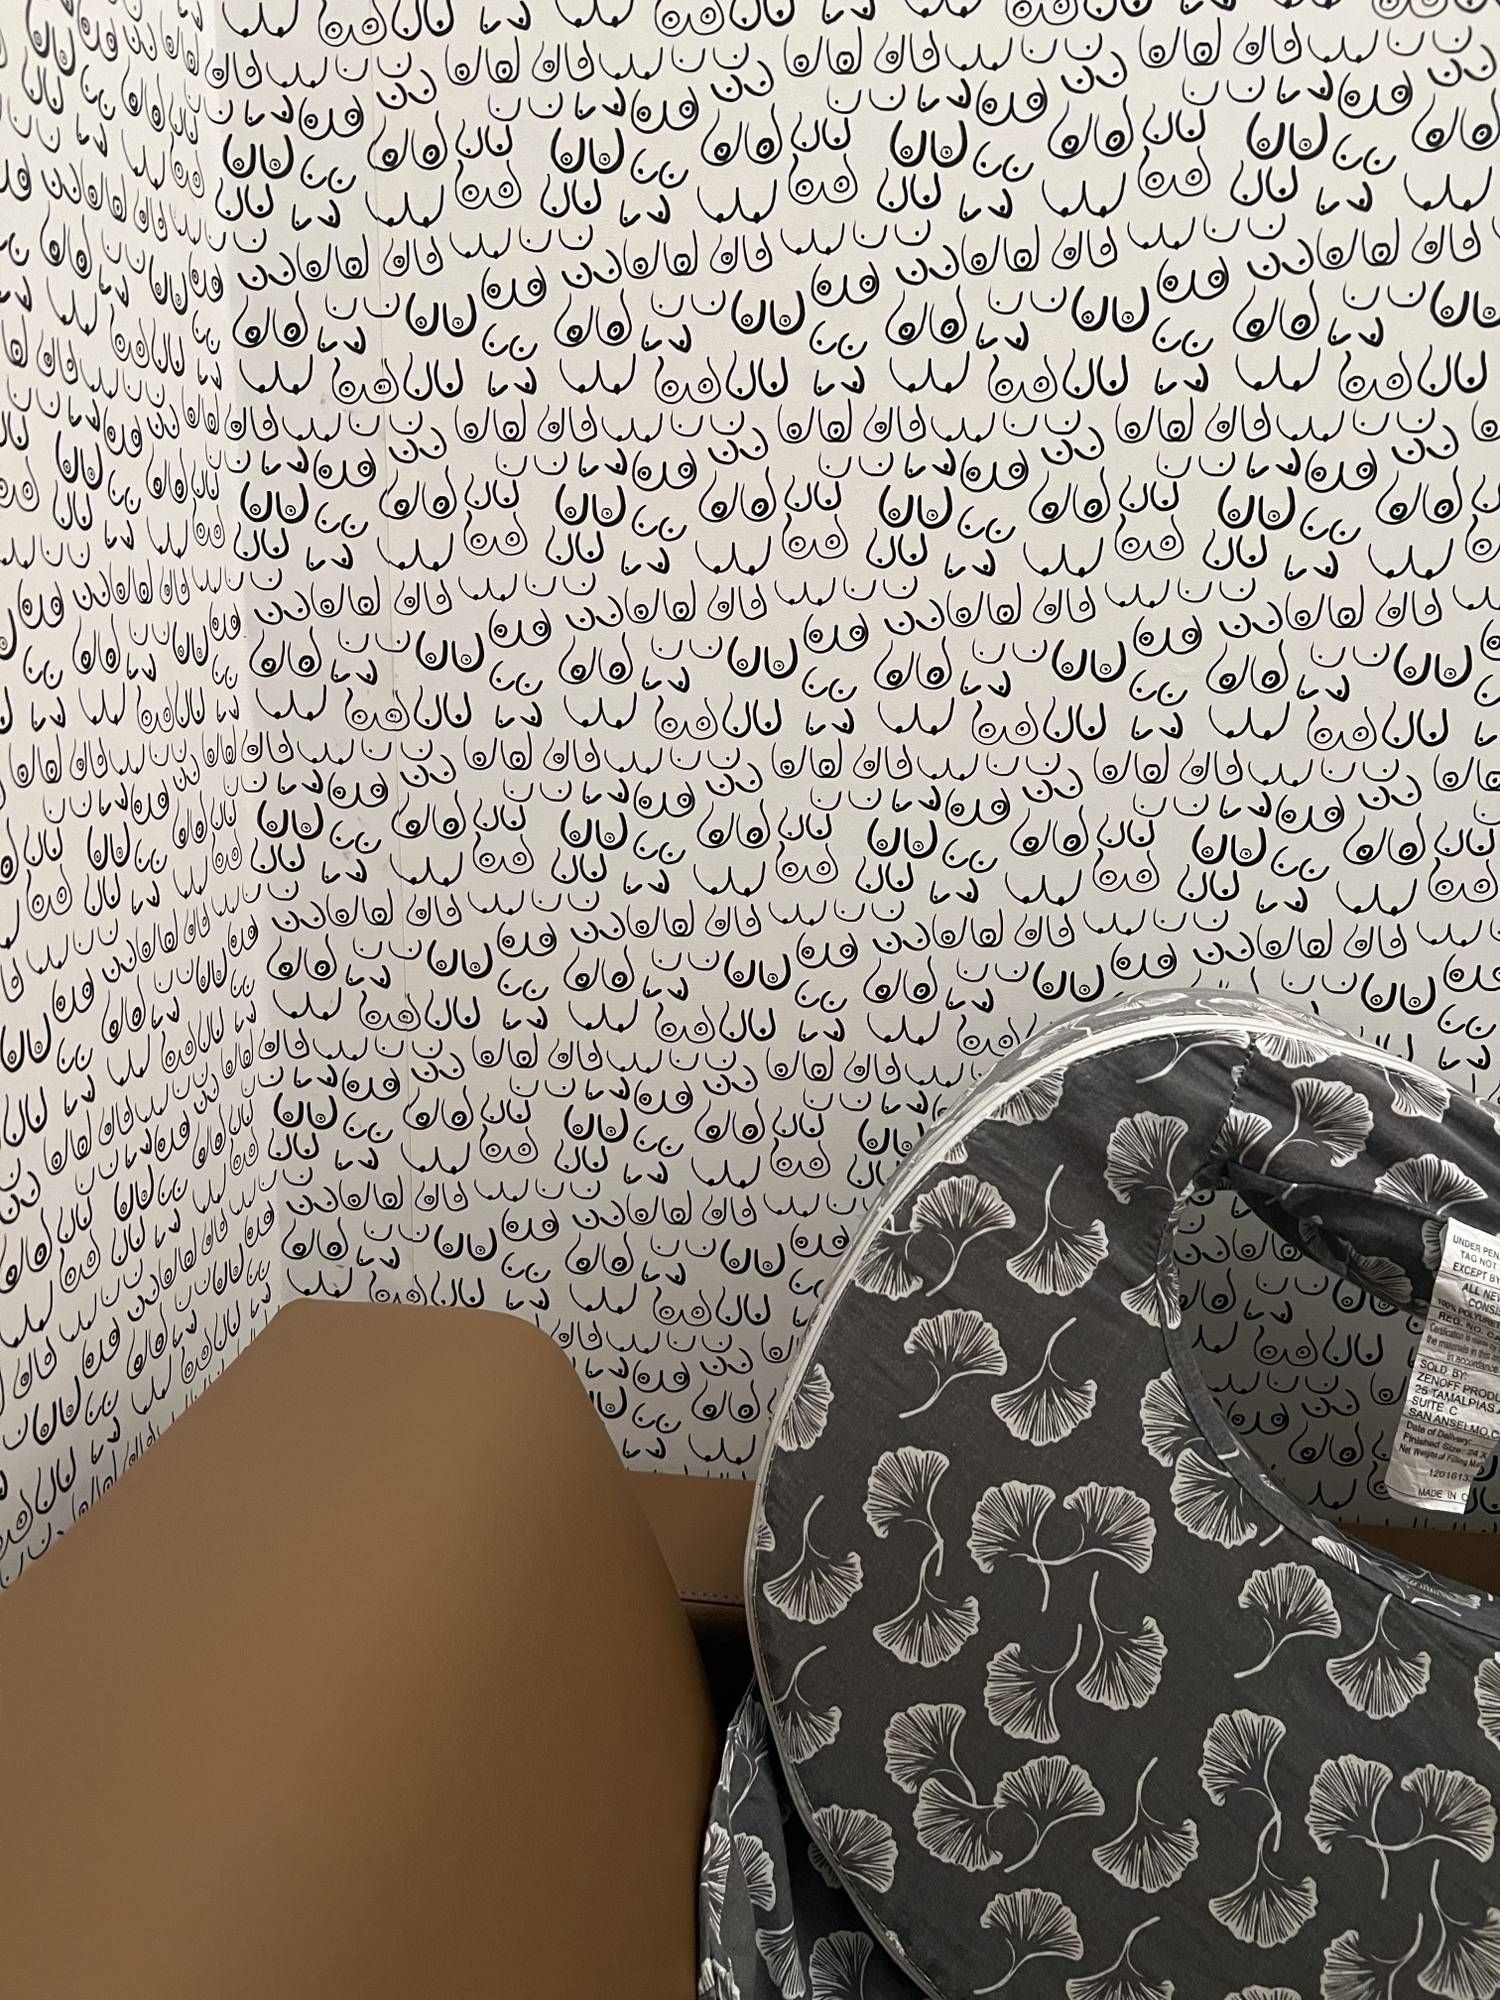 This nursing room has the breast wallpaper